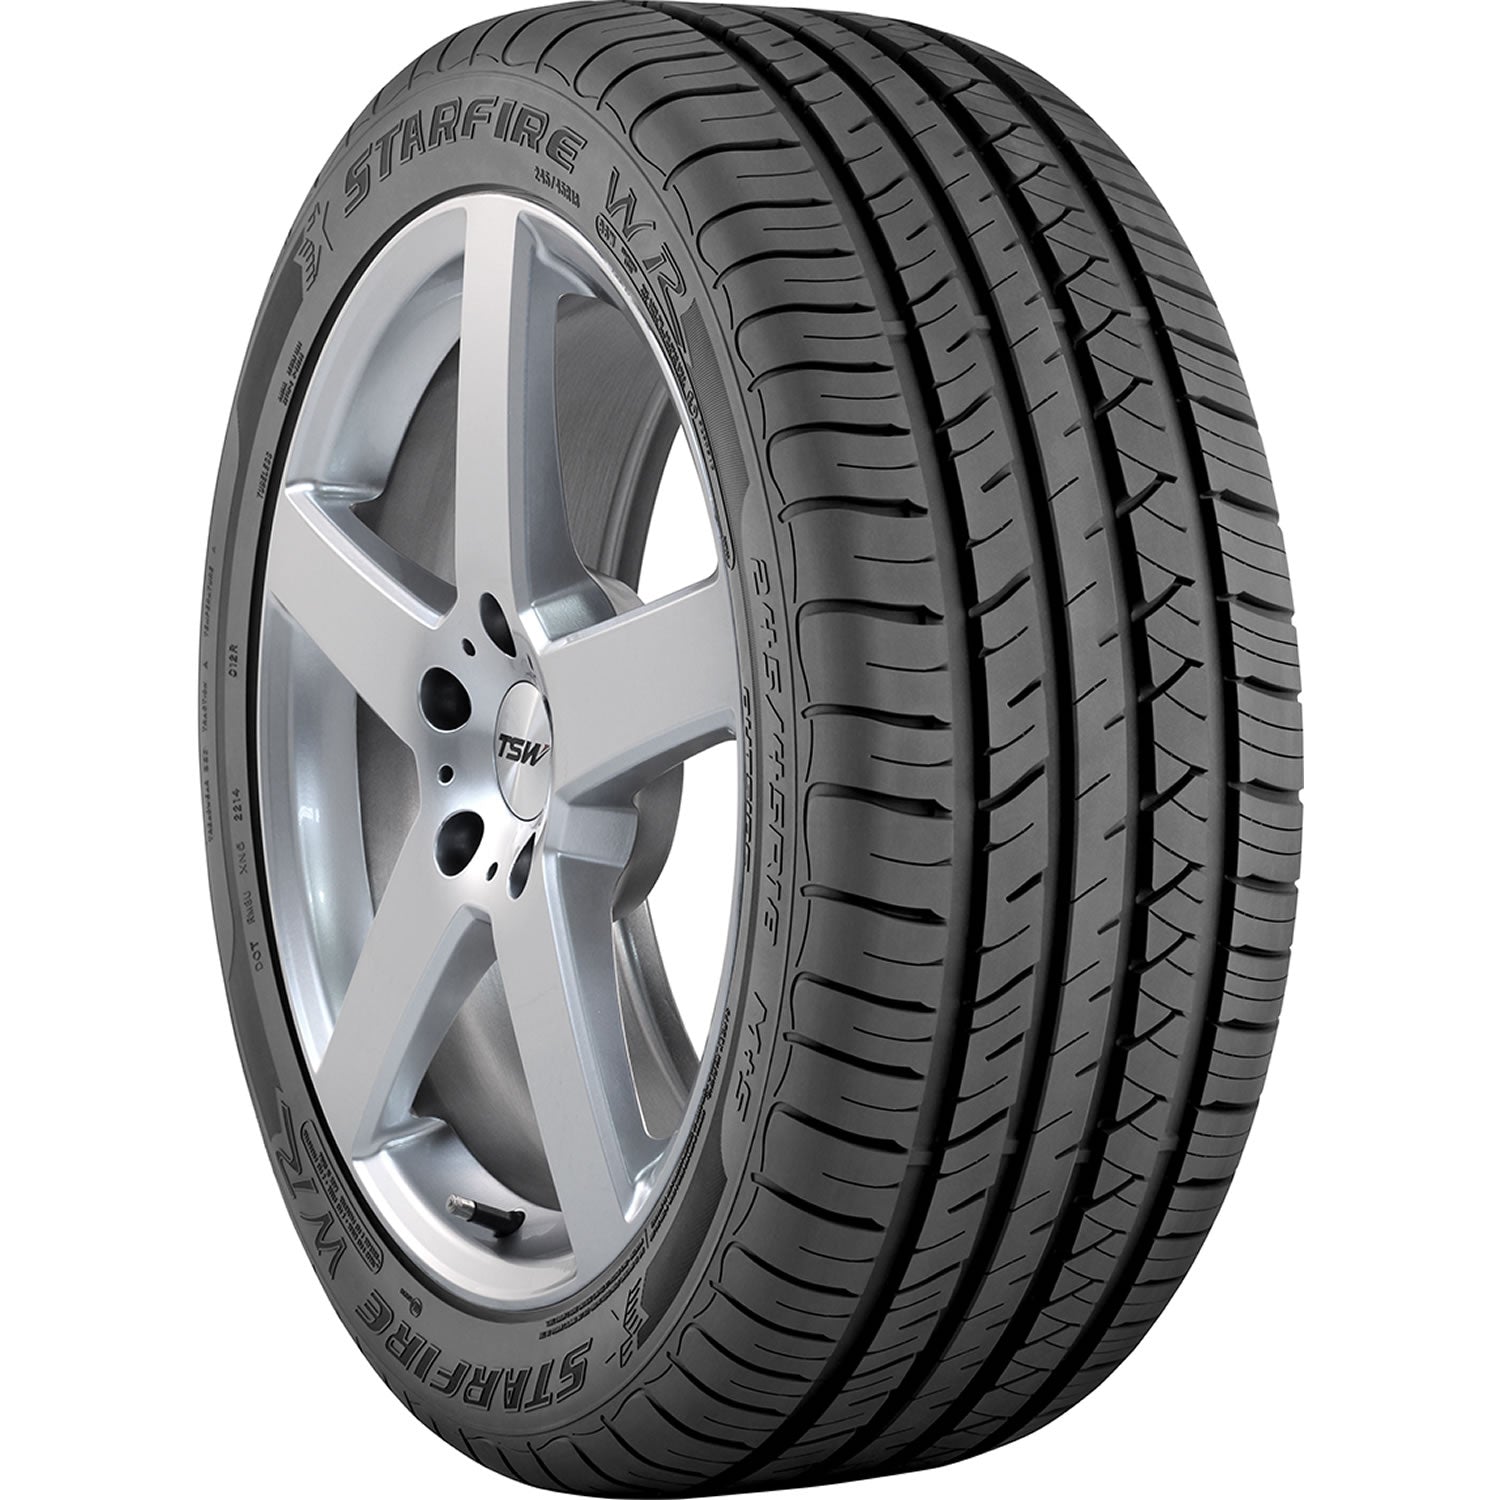 STARFIRE WR 245/40R18XL (25.8X9.8R 18) Tires